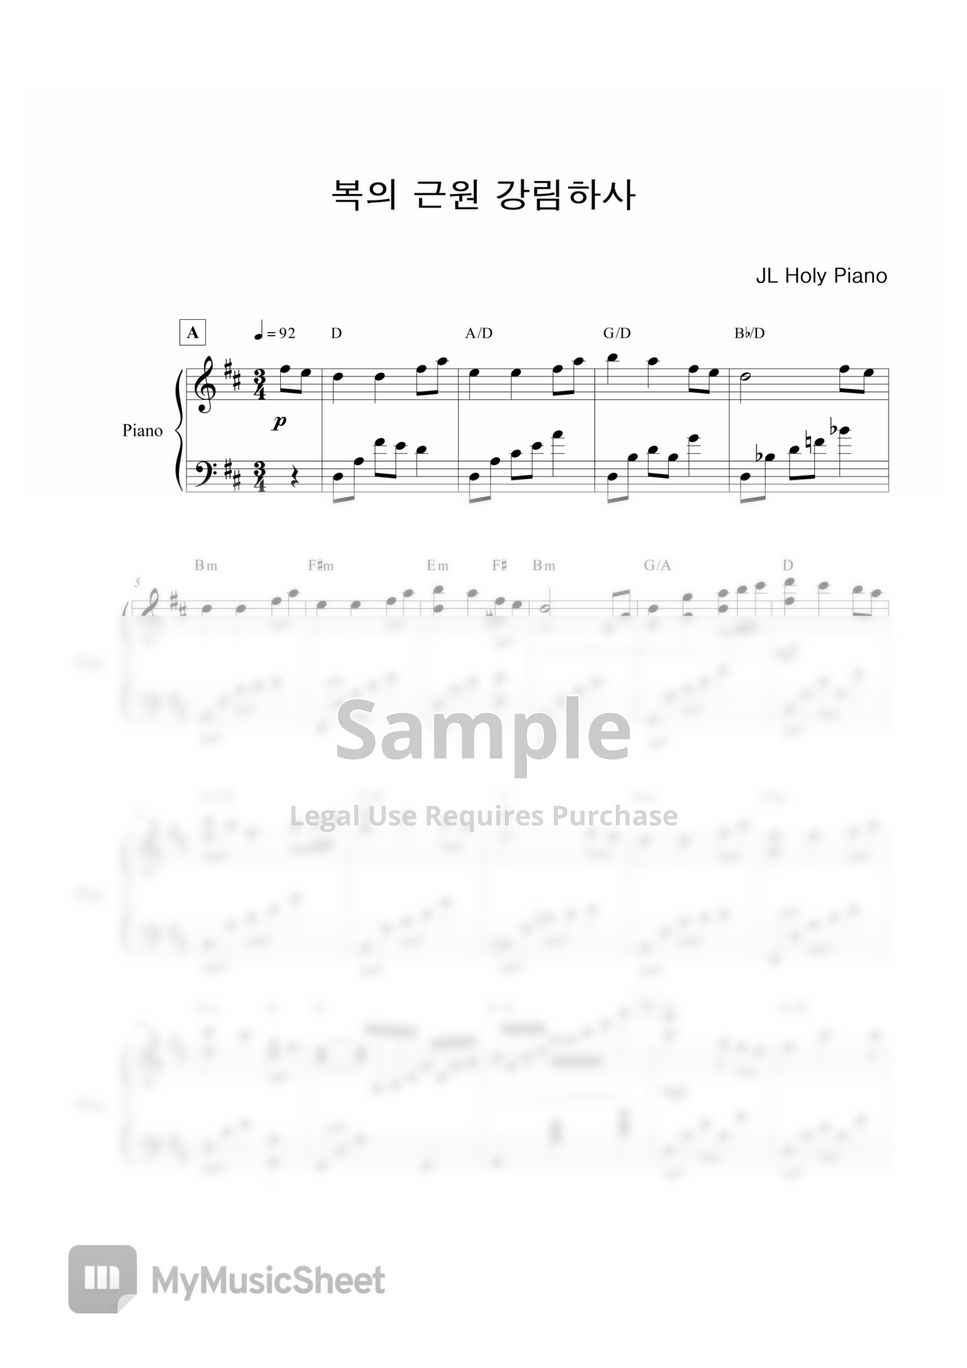 JL Holy Piano - 복의근원강림하사(찬송가28장) by JL Holy Piano